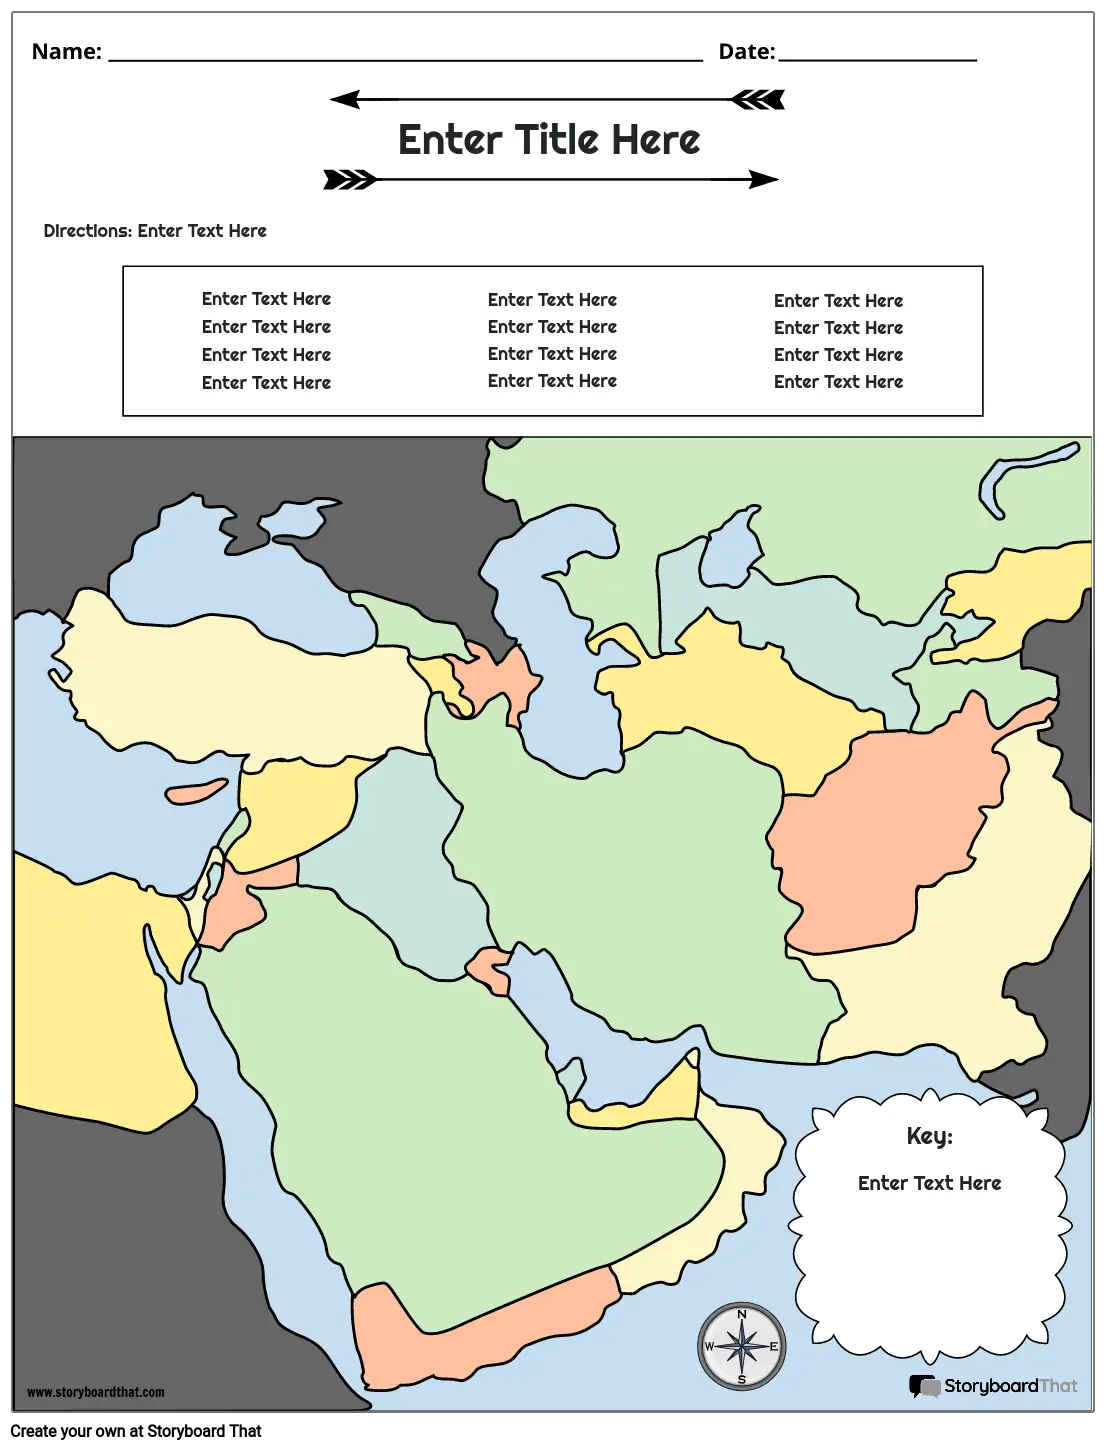 Mapa do Oriente Médio